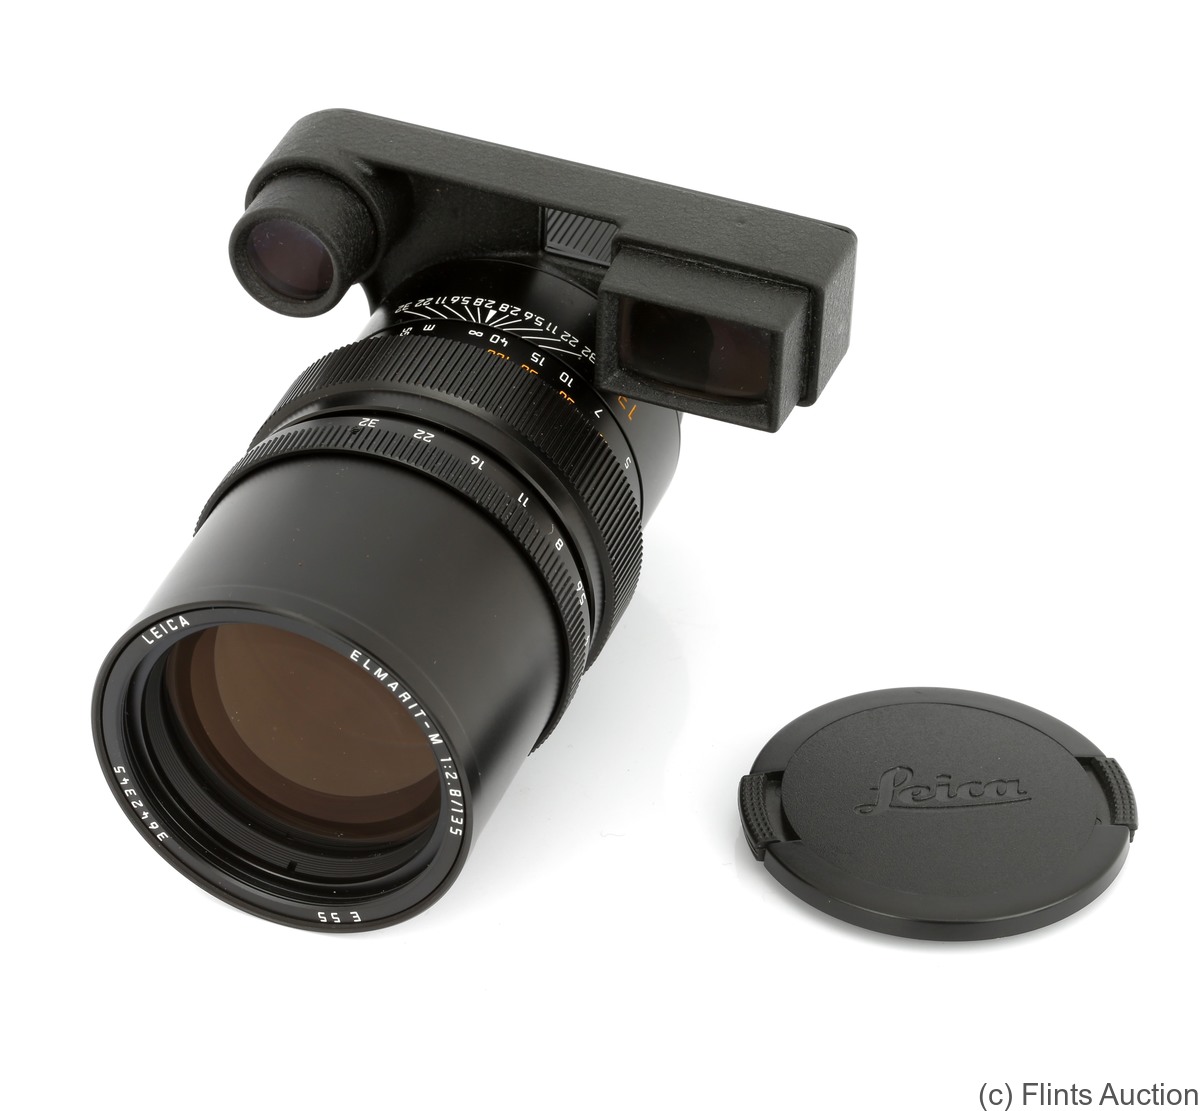 Leitz: 135mm (13.5cm) f2.8 Elmarit-M (11829) camera